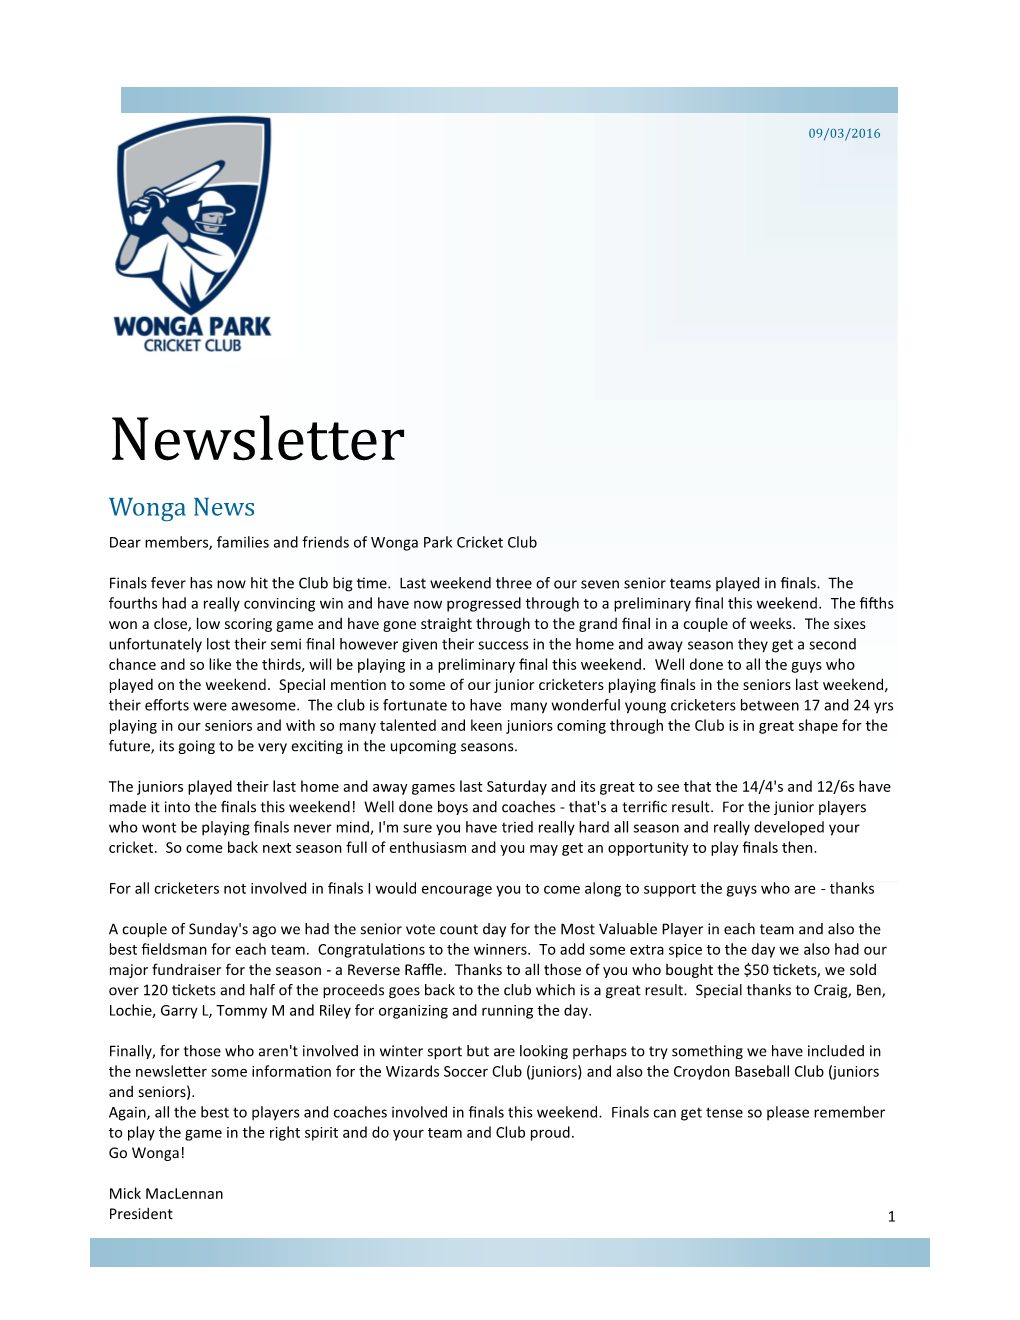 Newsletter Wonga News Dear Members, Families and Friends of Wonga Park Cricket Club